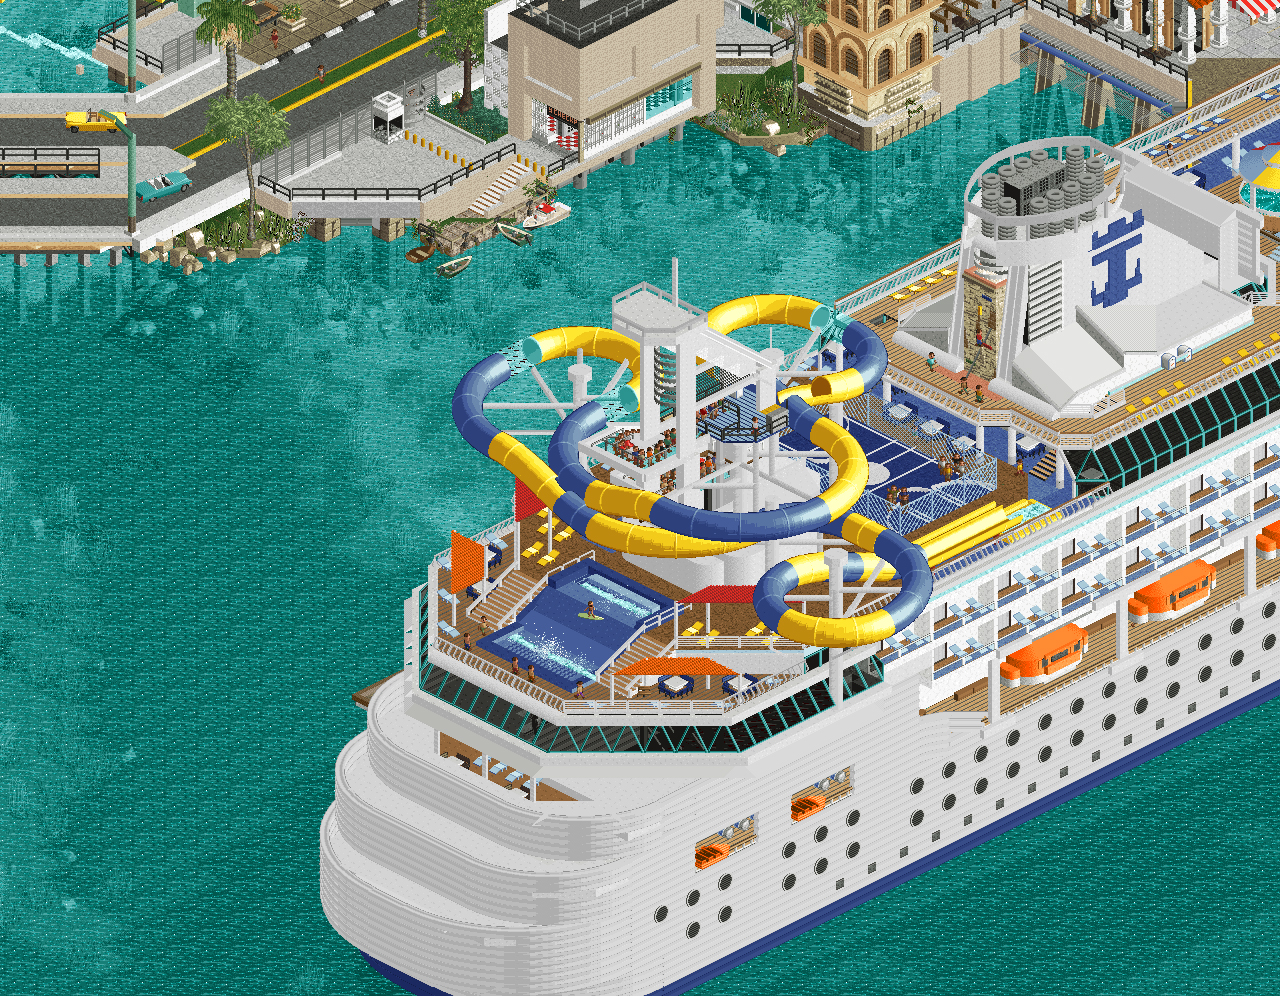 screen_6408 Legend of the Seas - Docked in Puerta Vieja